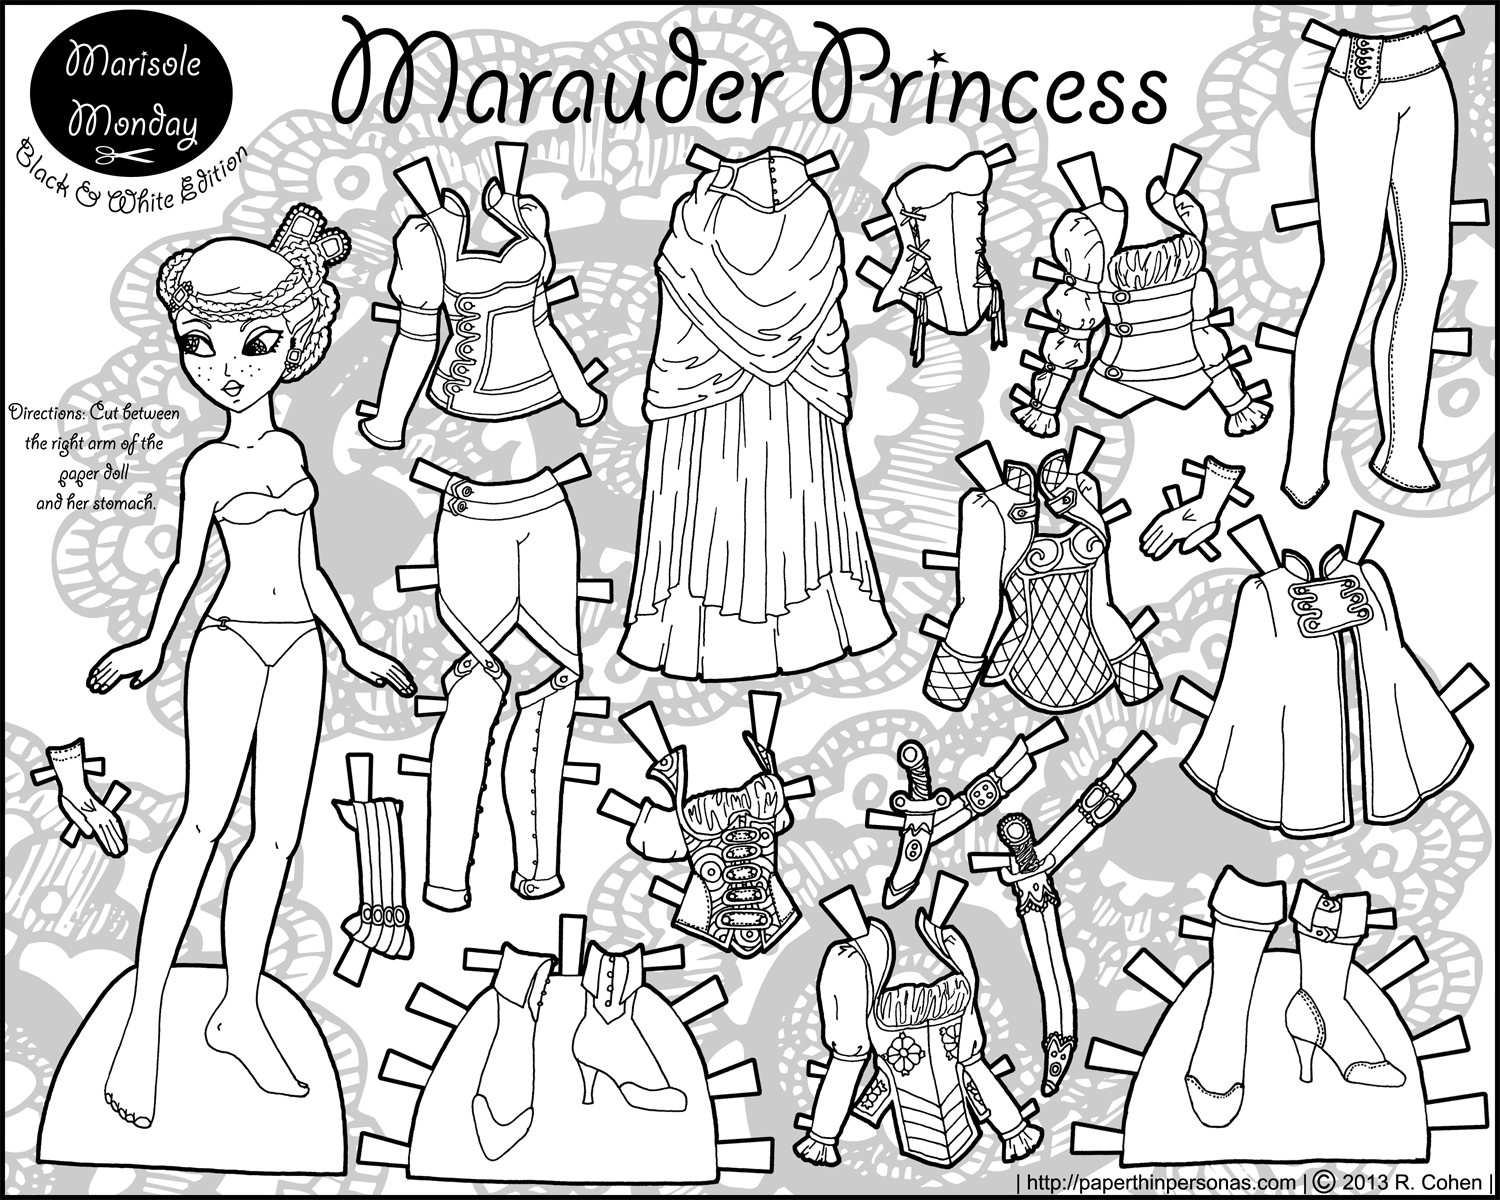 Maurader princess paper doll coloring page â paper thin personas